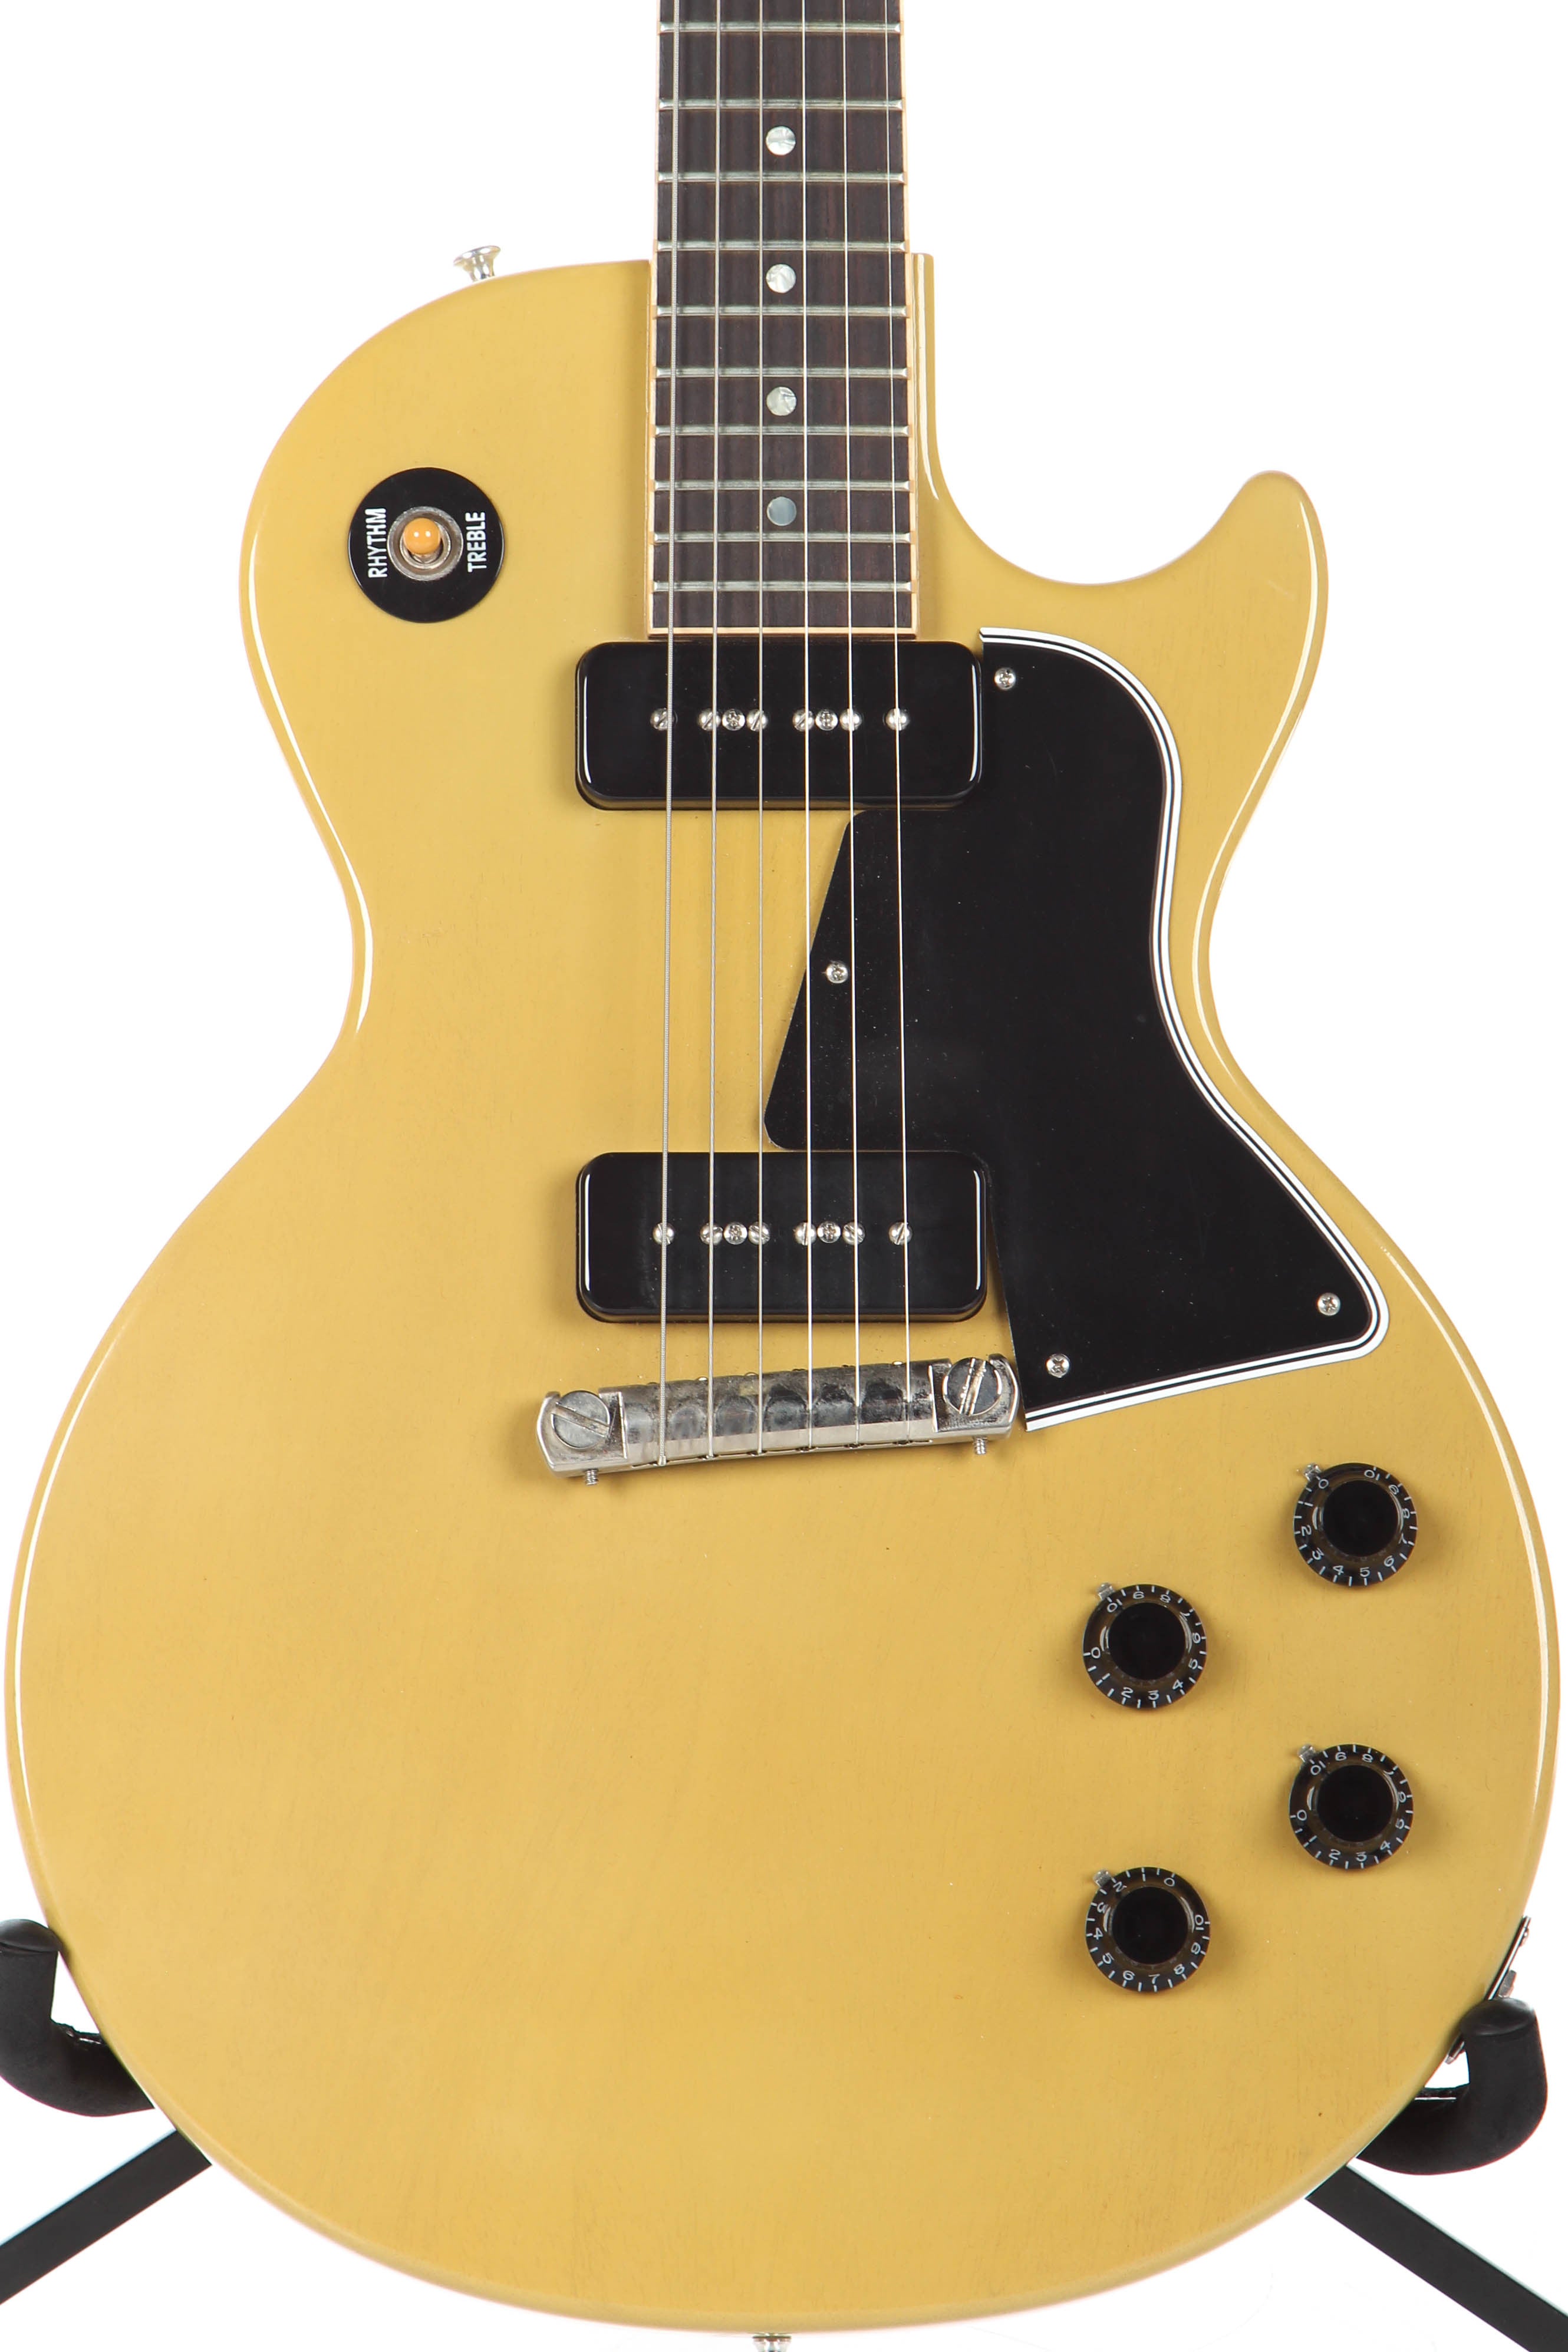 11 Gibson Custom Shop Les Paul Special Tv Yellow 1960 Reissue Vos Guitar Chimp